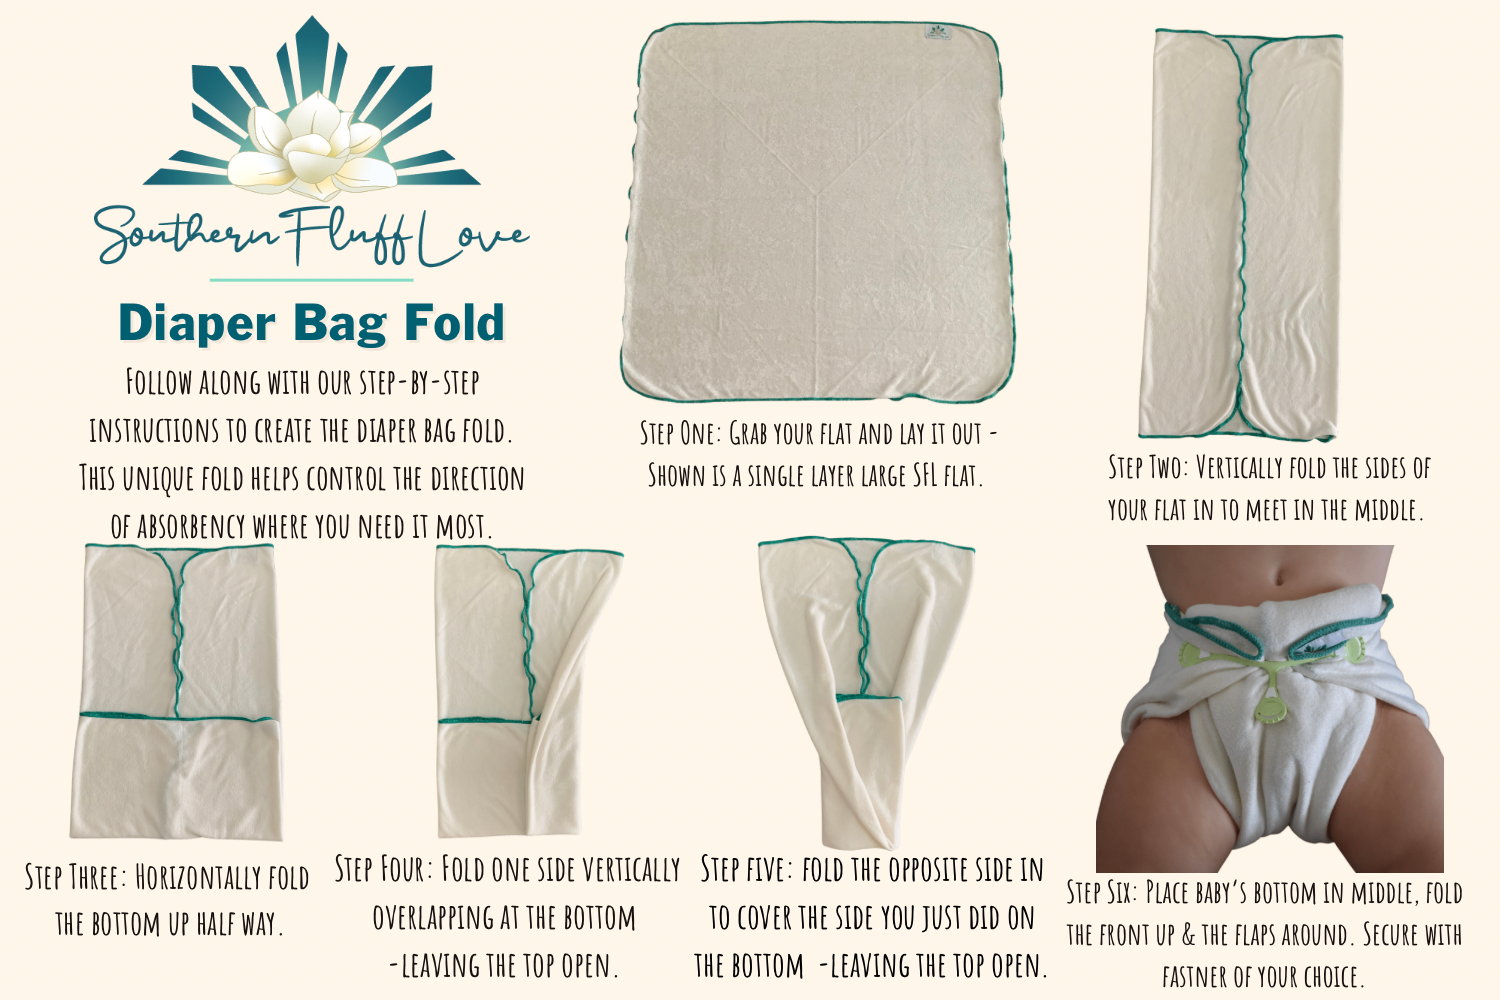 How to Diaper Bag Fold a Flat